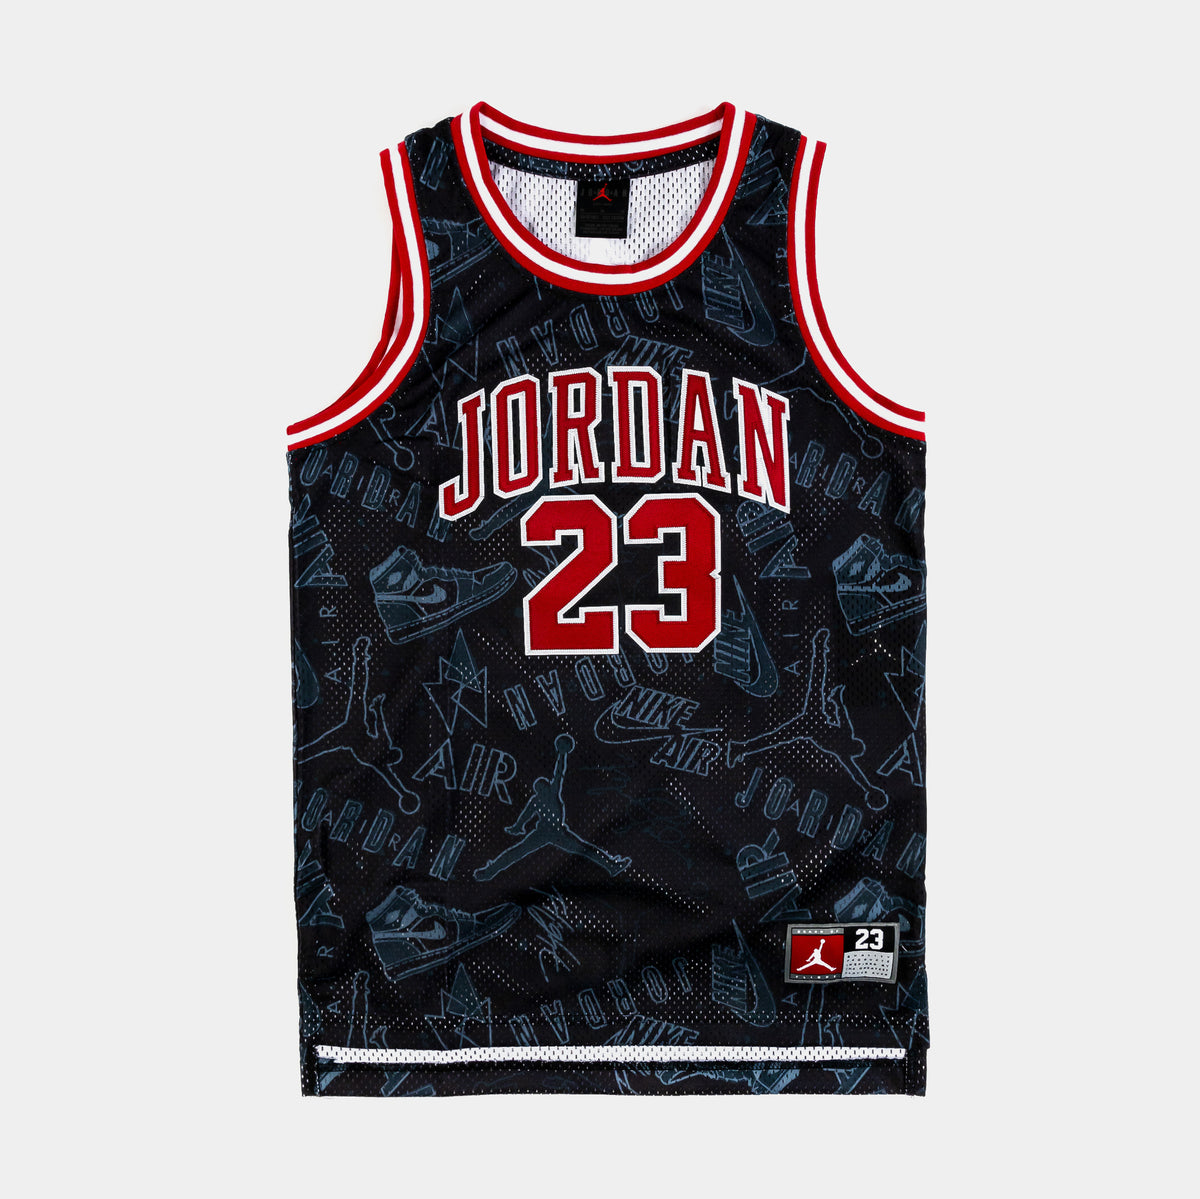 Nike Mochila Air Jordan 23 Jersey, Negro/Blanco, Moderno